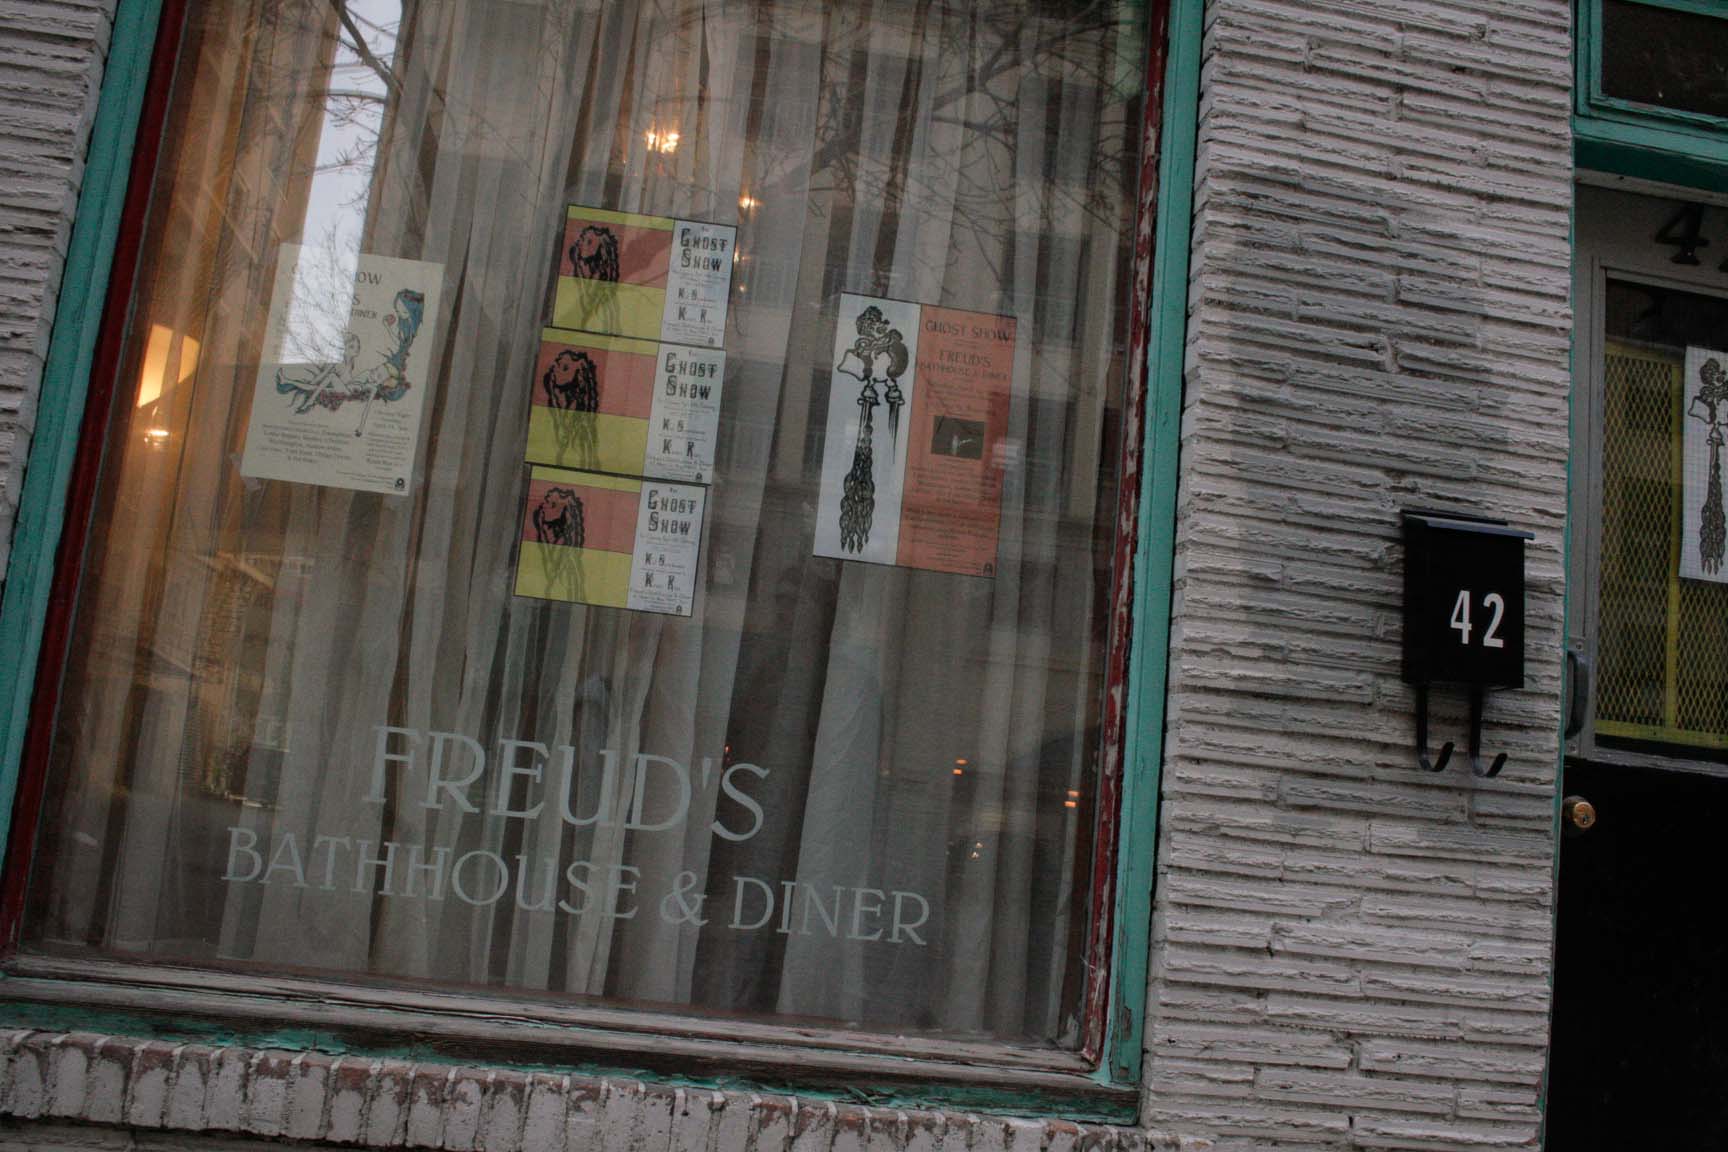 Freud's Bathhouse & Diner